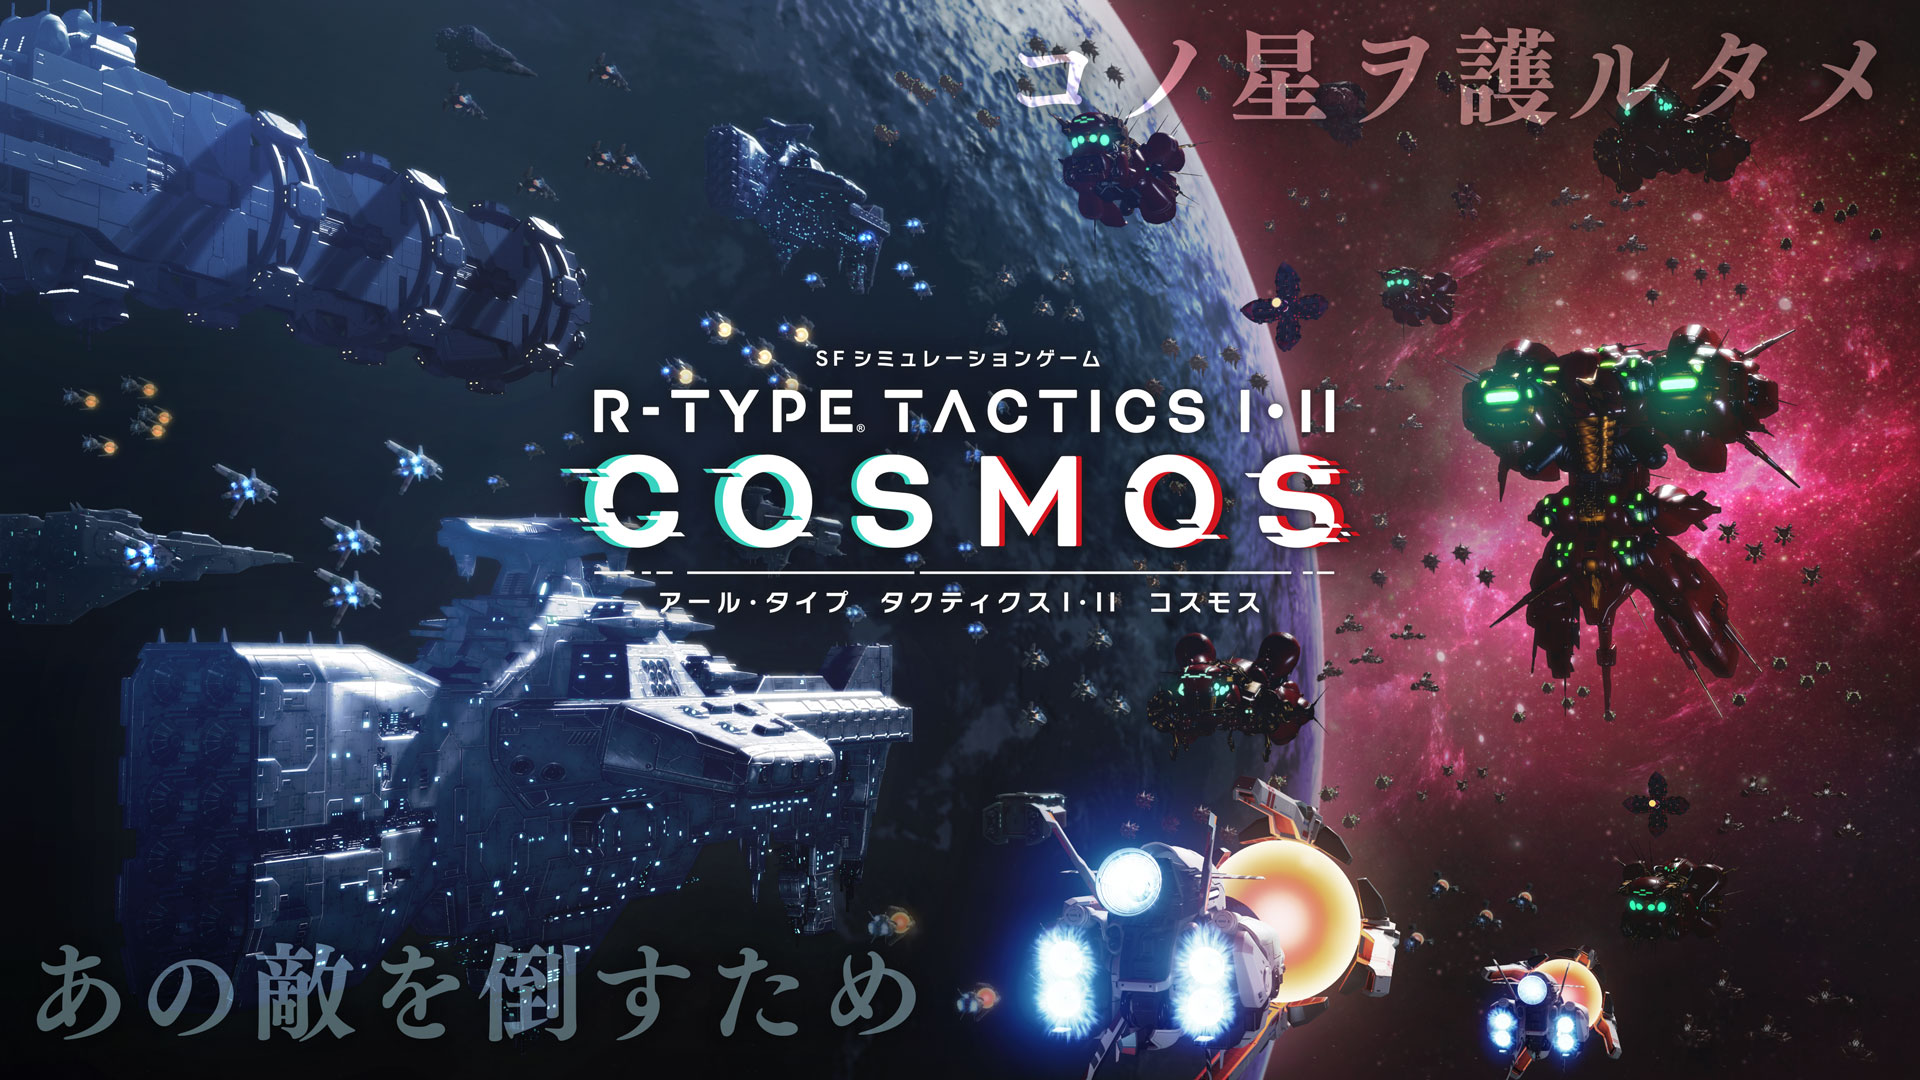 「R-TYPE TACTICS I・II COSMOS」メインビジュアル